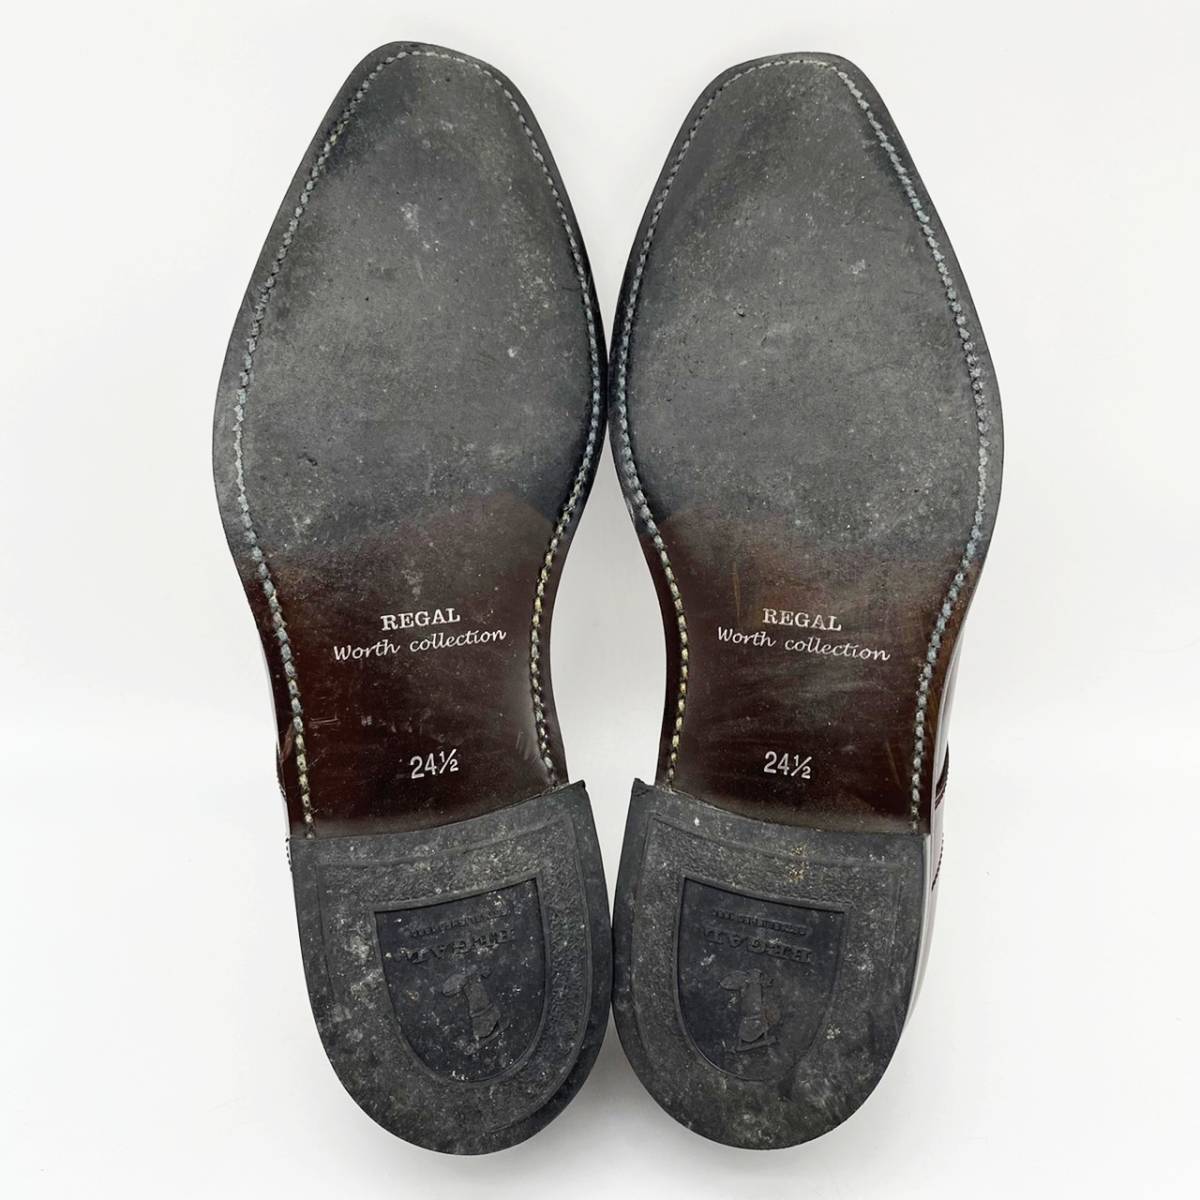 REGAL リーガル 1594 Uチップ 24.5 革靴 ダークブラウン ビジネスシューズ メンズ 靴 男性用 濃茶